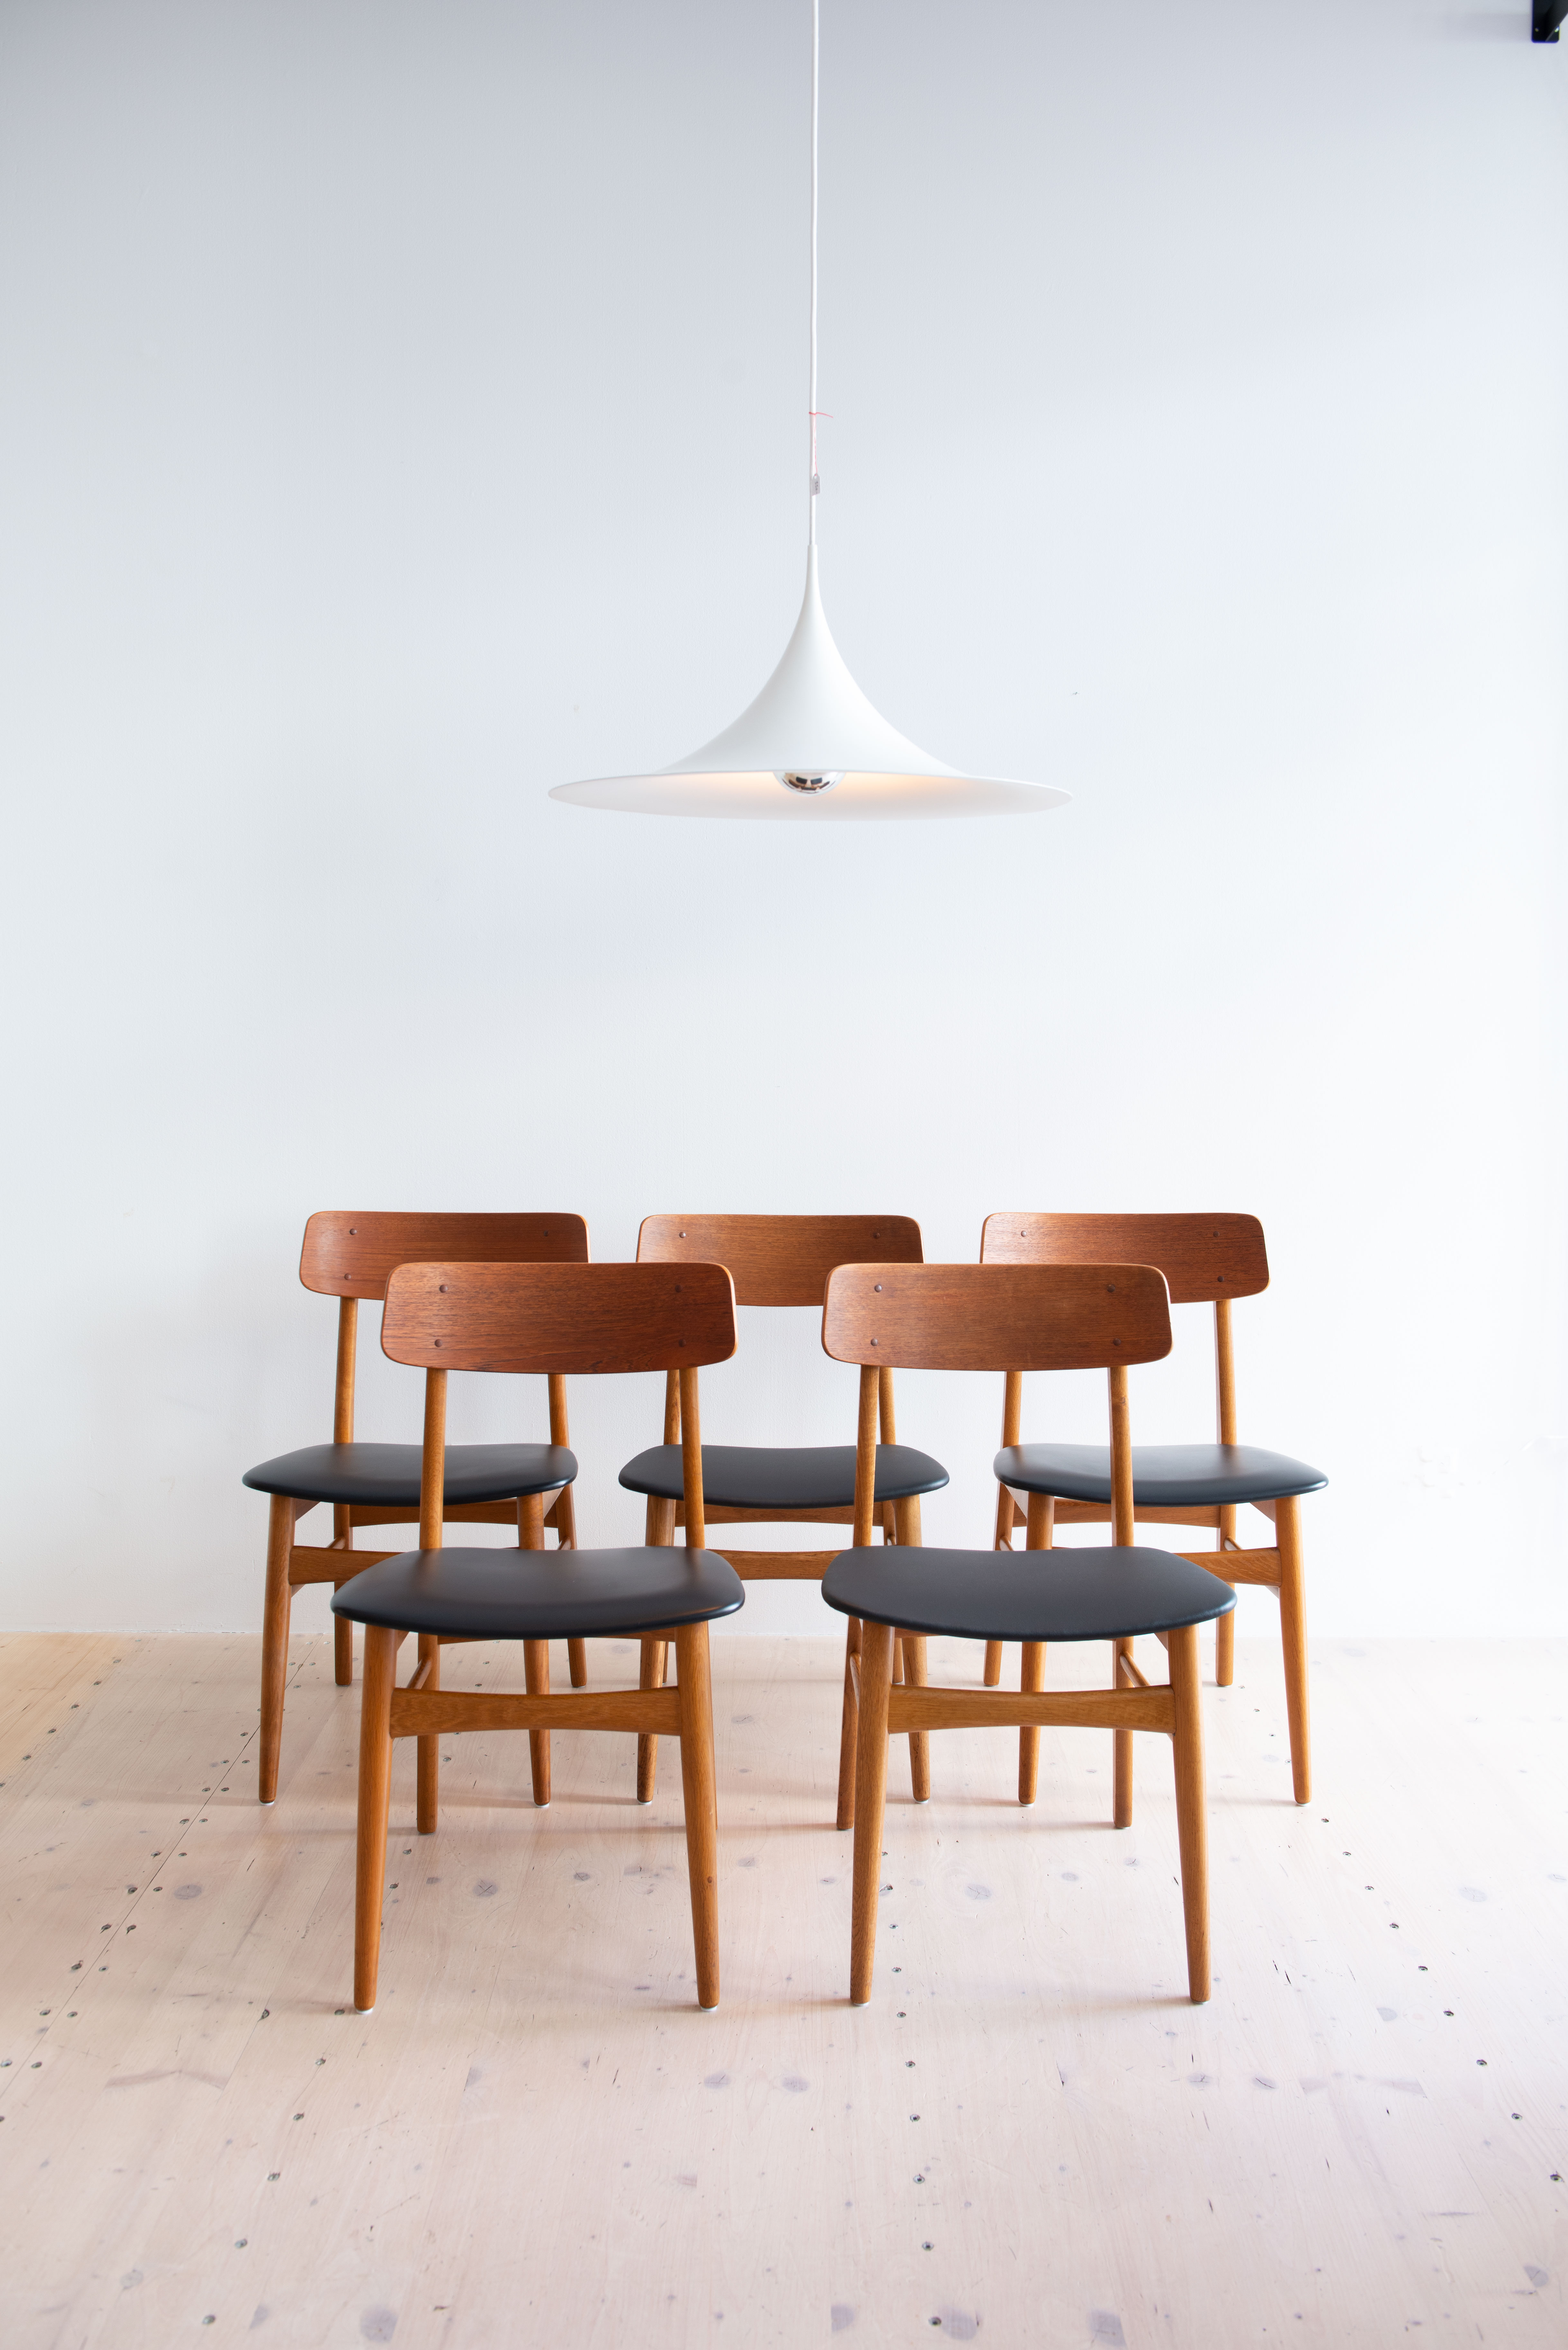 Farstrup Teak and Oak Dining Chairs. Made in Denmark. Mid-Century Modern furniture and other stuff. Available at heyday möbel, Grubenstrasse 19, 8045 Zürich. Danish-Modern; vintage; retro.